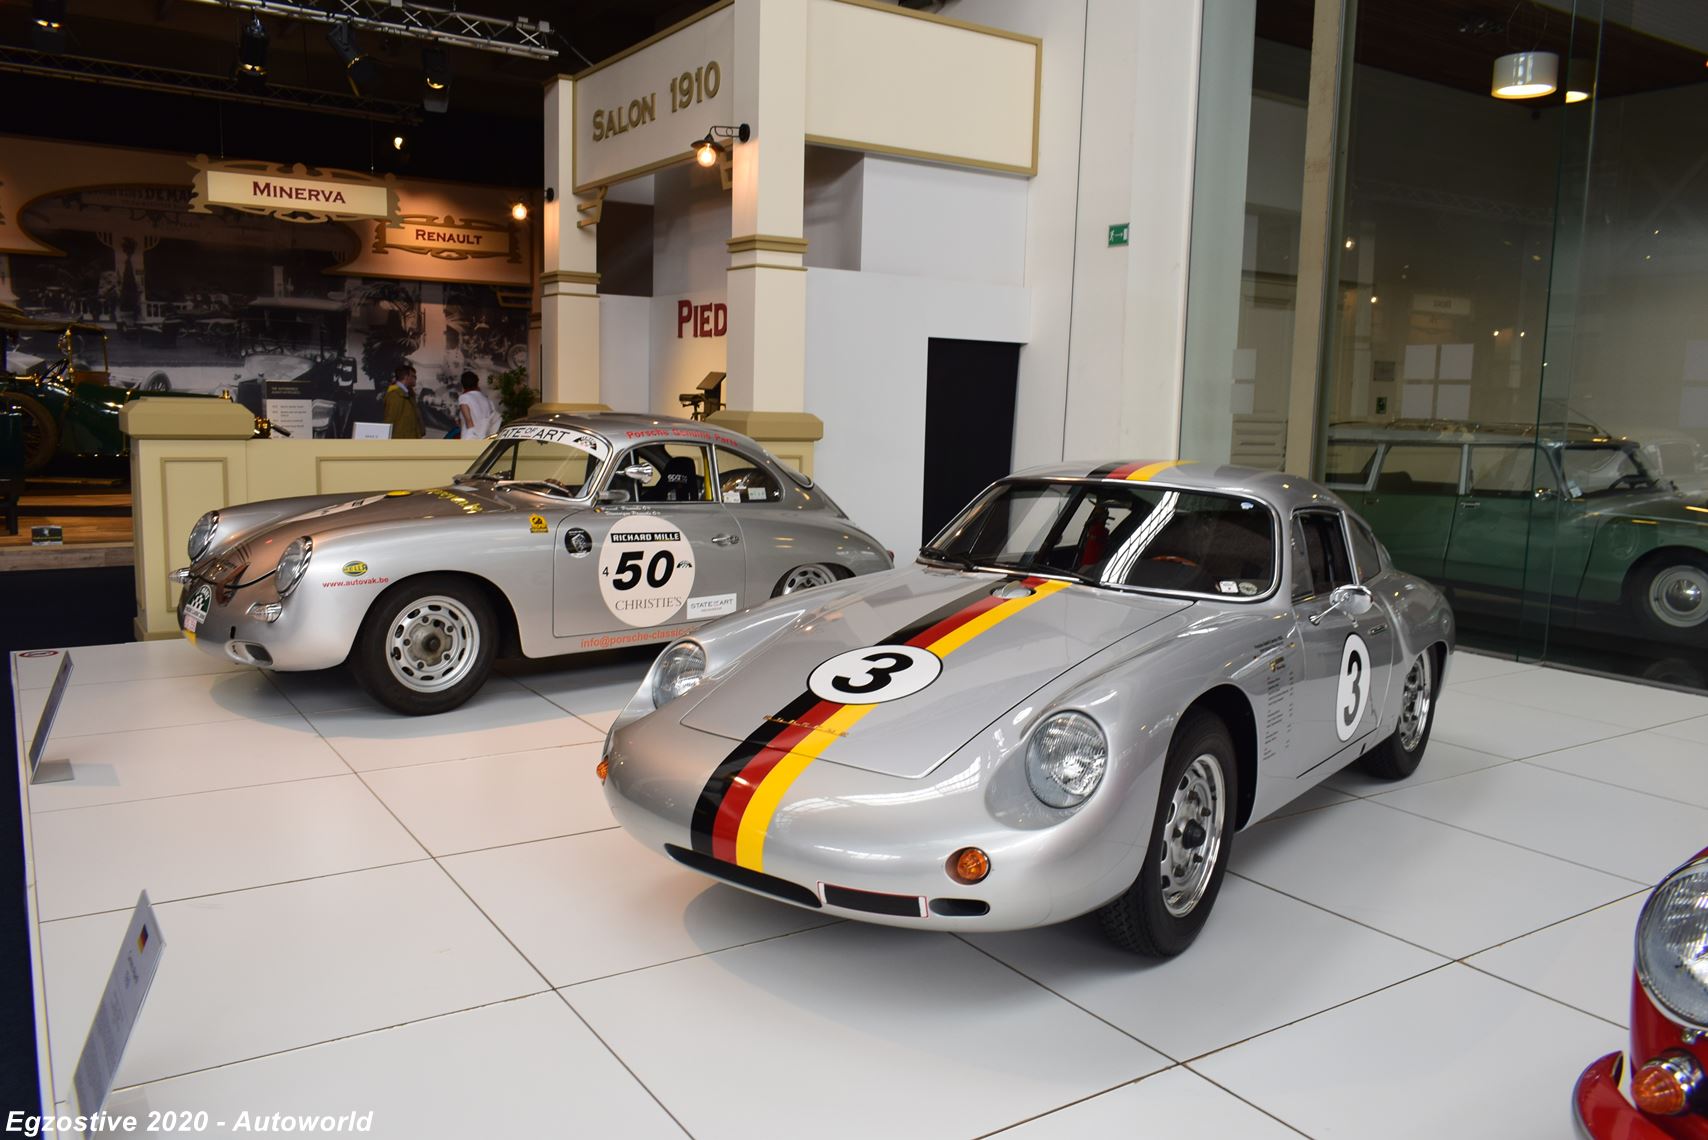 Classic Porsches take the spotlight in Autoworld | Egzostive